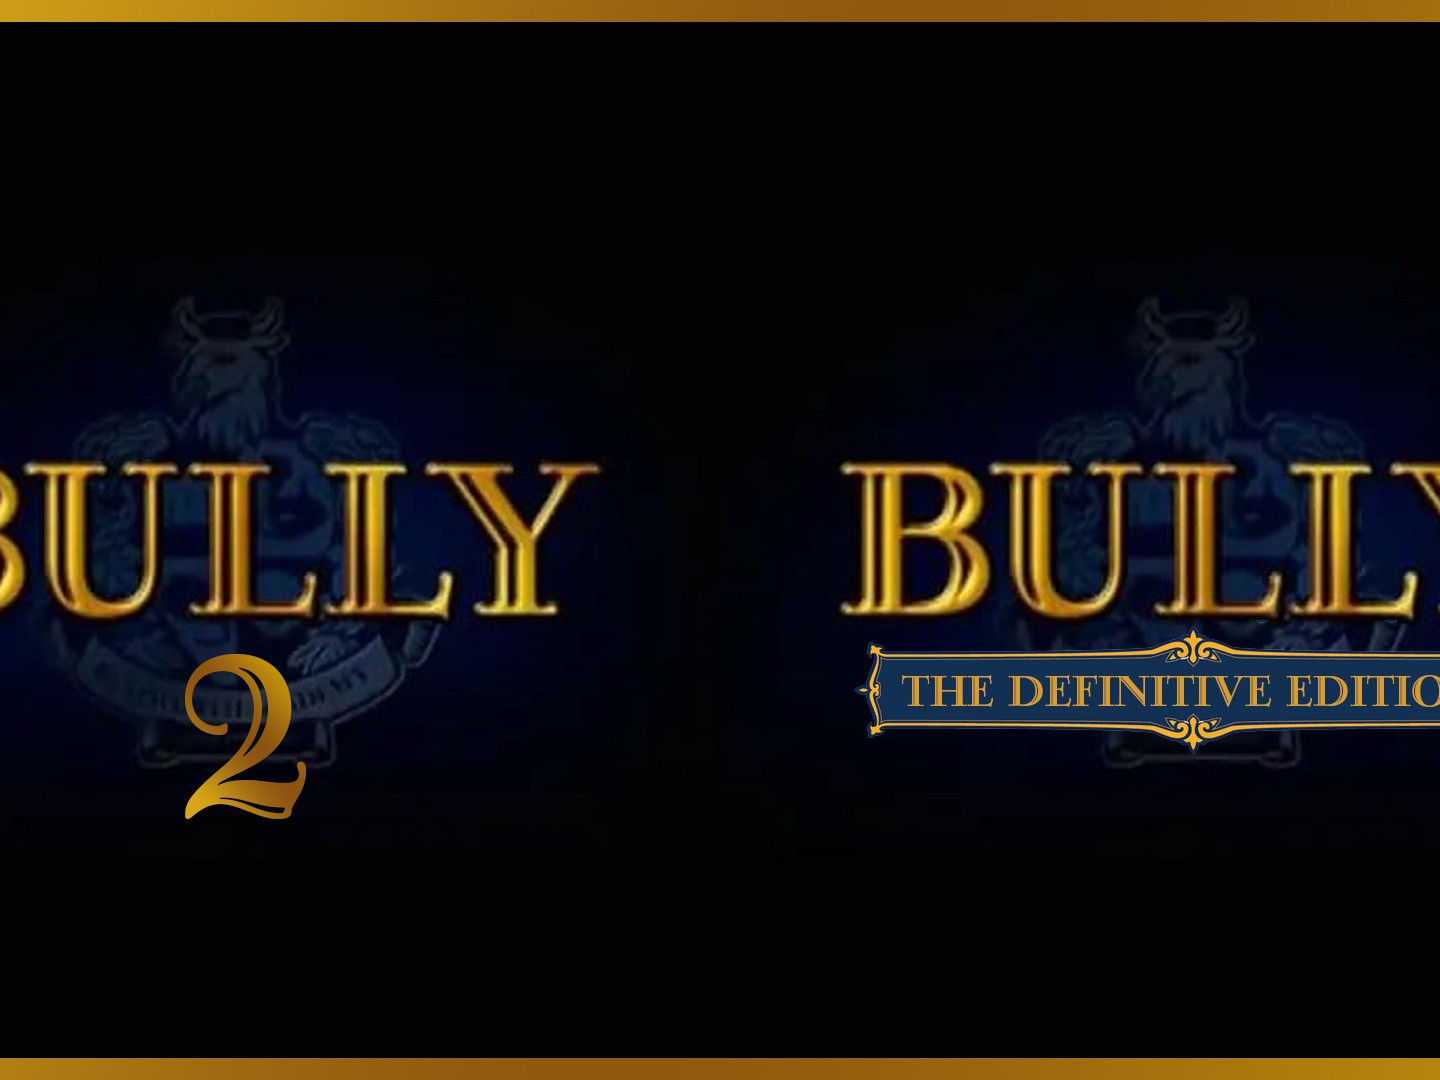 Bully 2 ou Bully The Definitive Edition